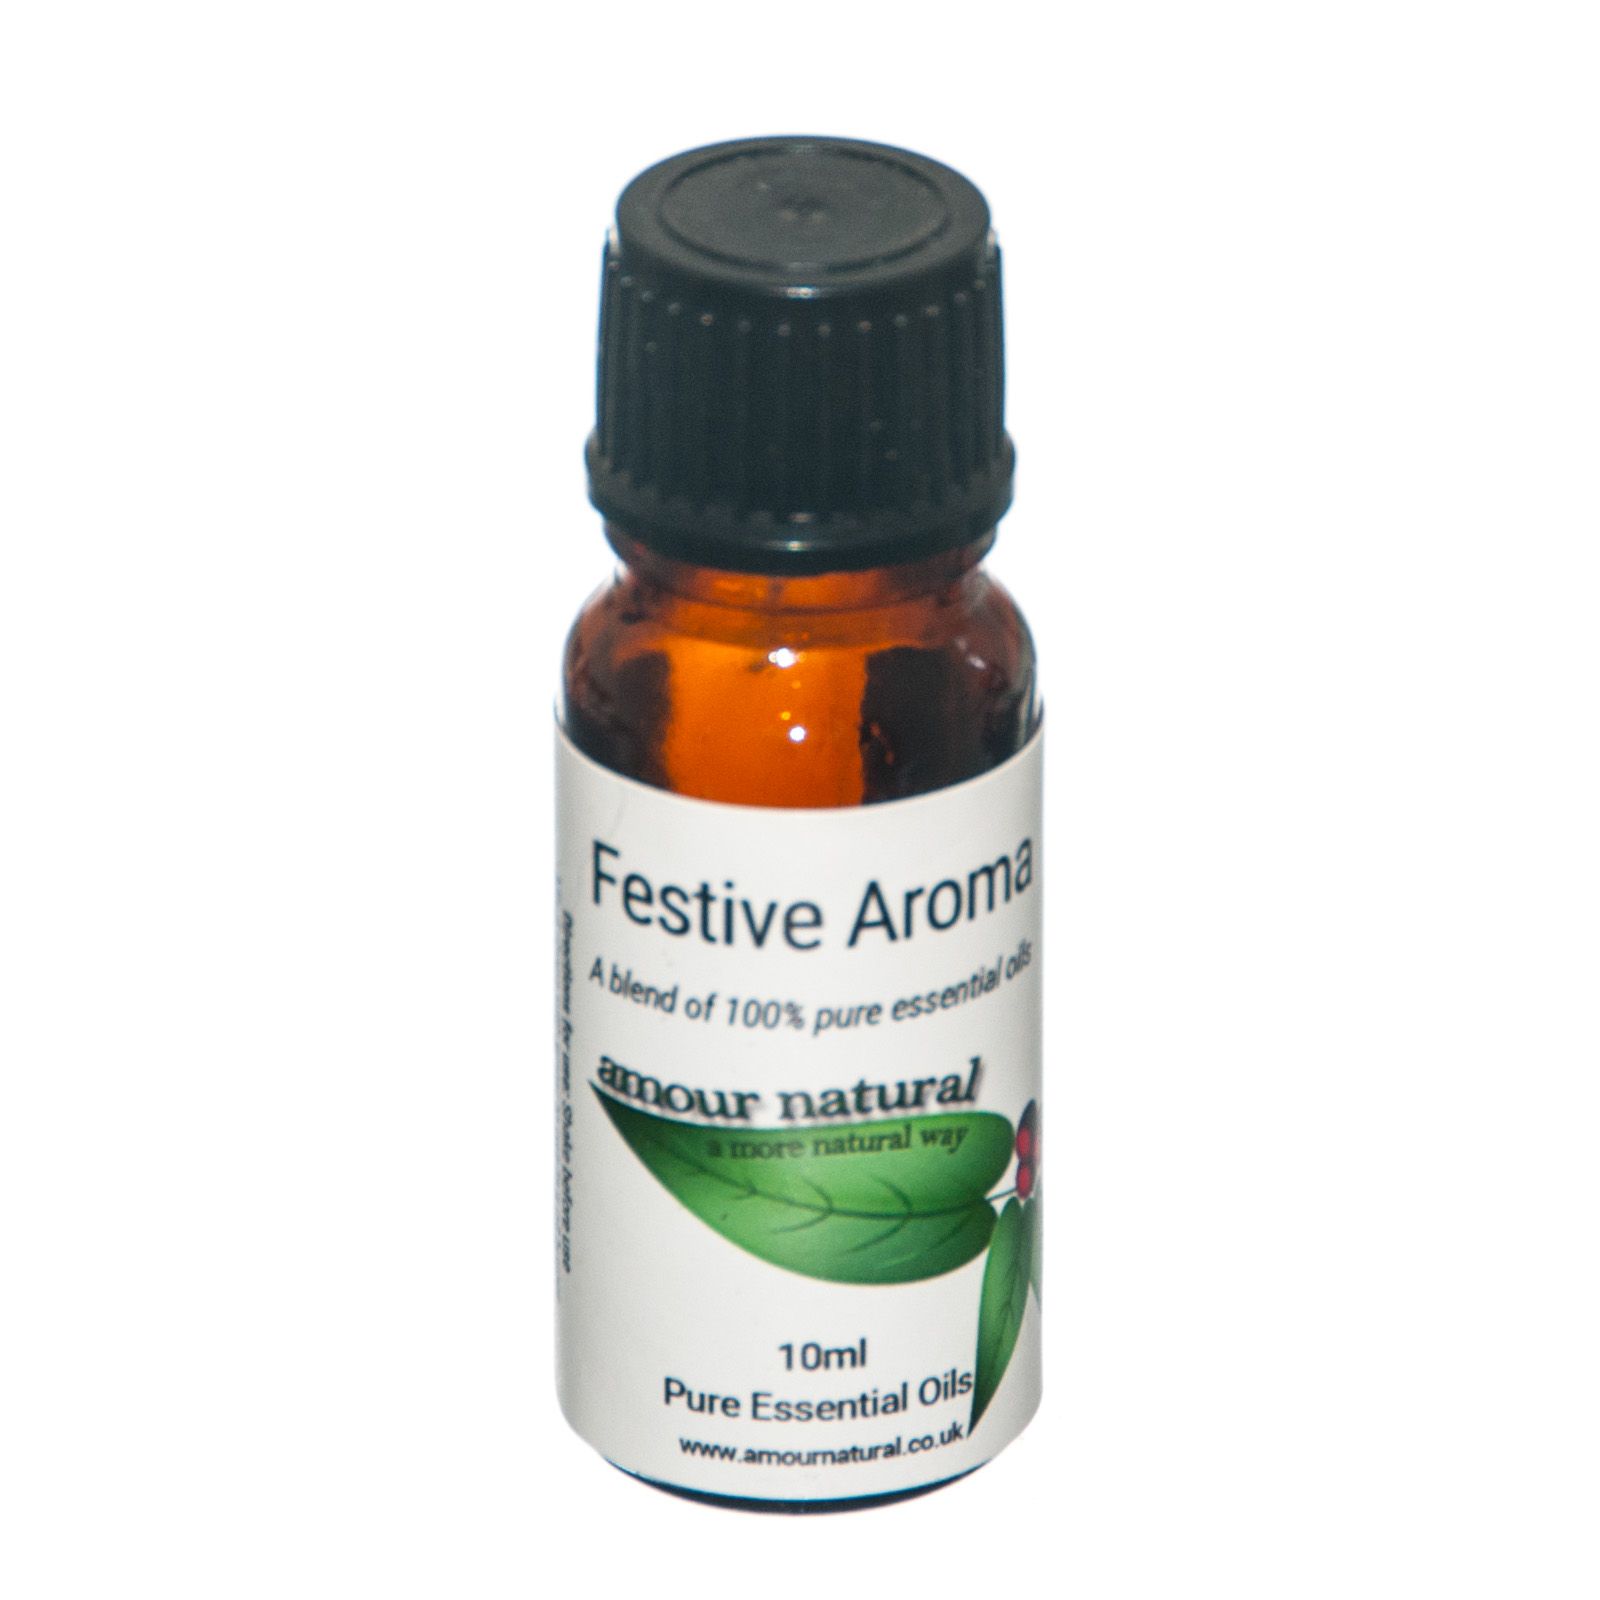 Festive Aroma Essential Oil Blend 10ml